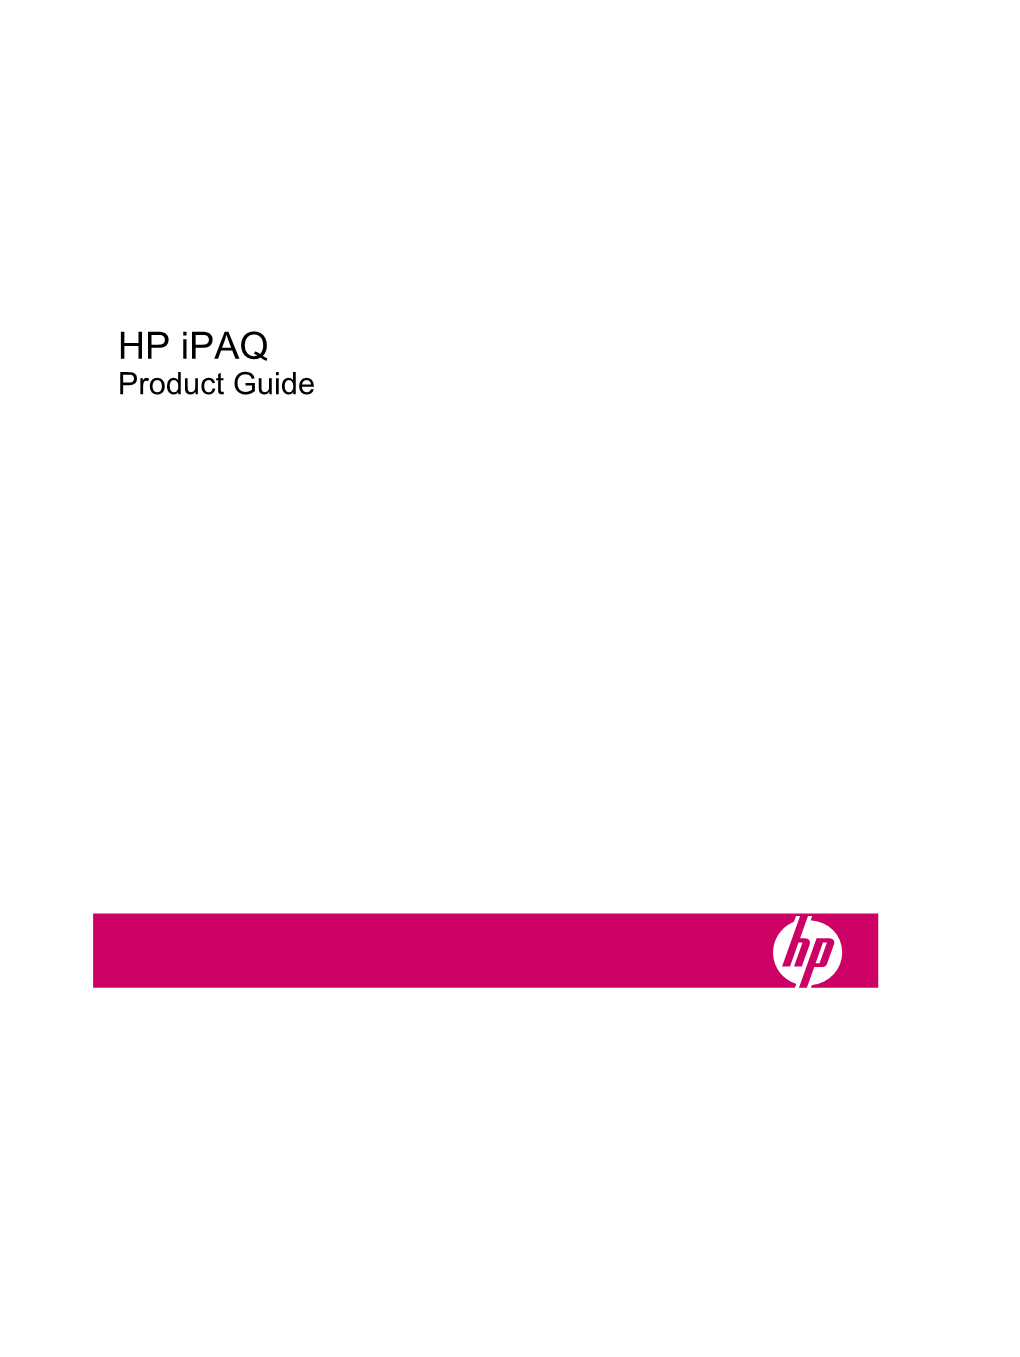 HP Ipaq Product Guide © Copyright 2008 Hewlett-Packard Development Company, L.P